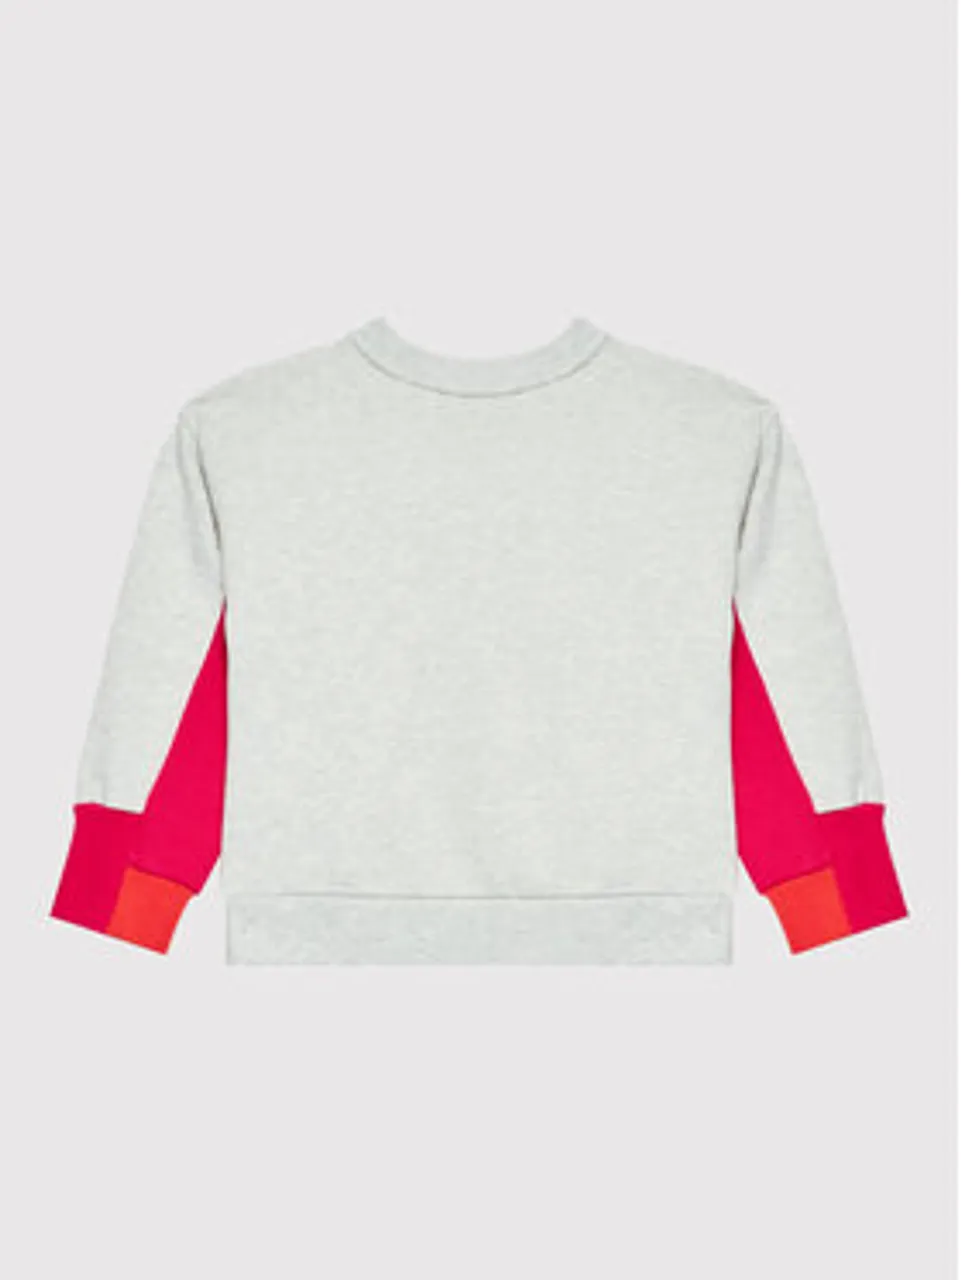 Kenzo Kids Sweatshirt K15568 M Grau Regular Fit